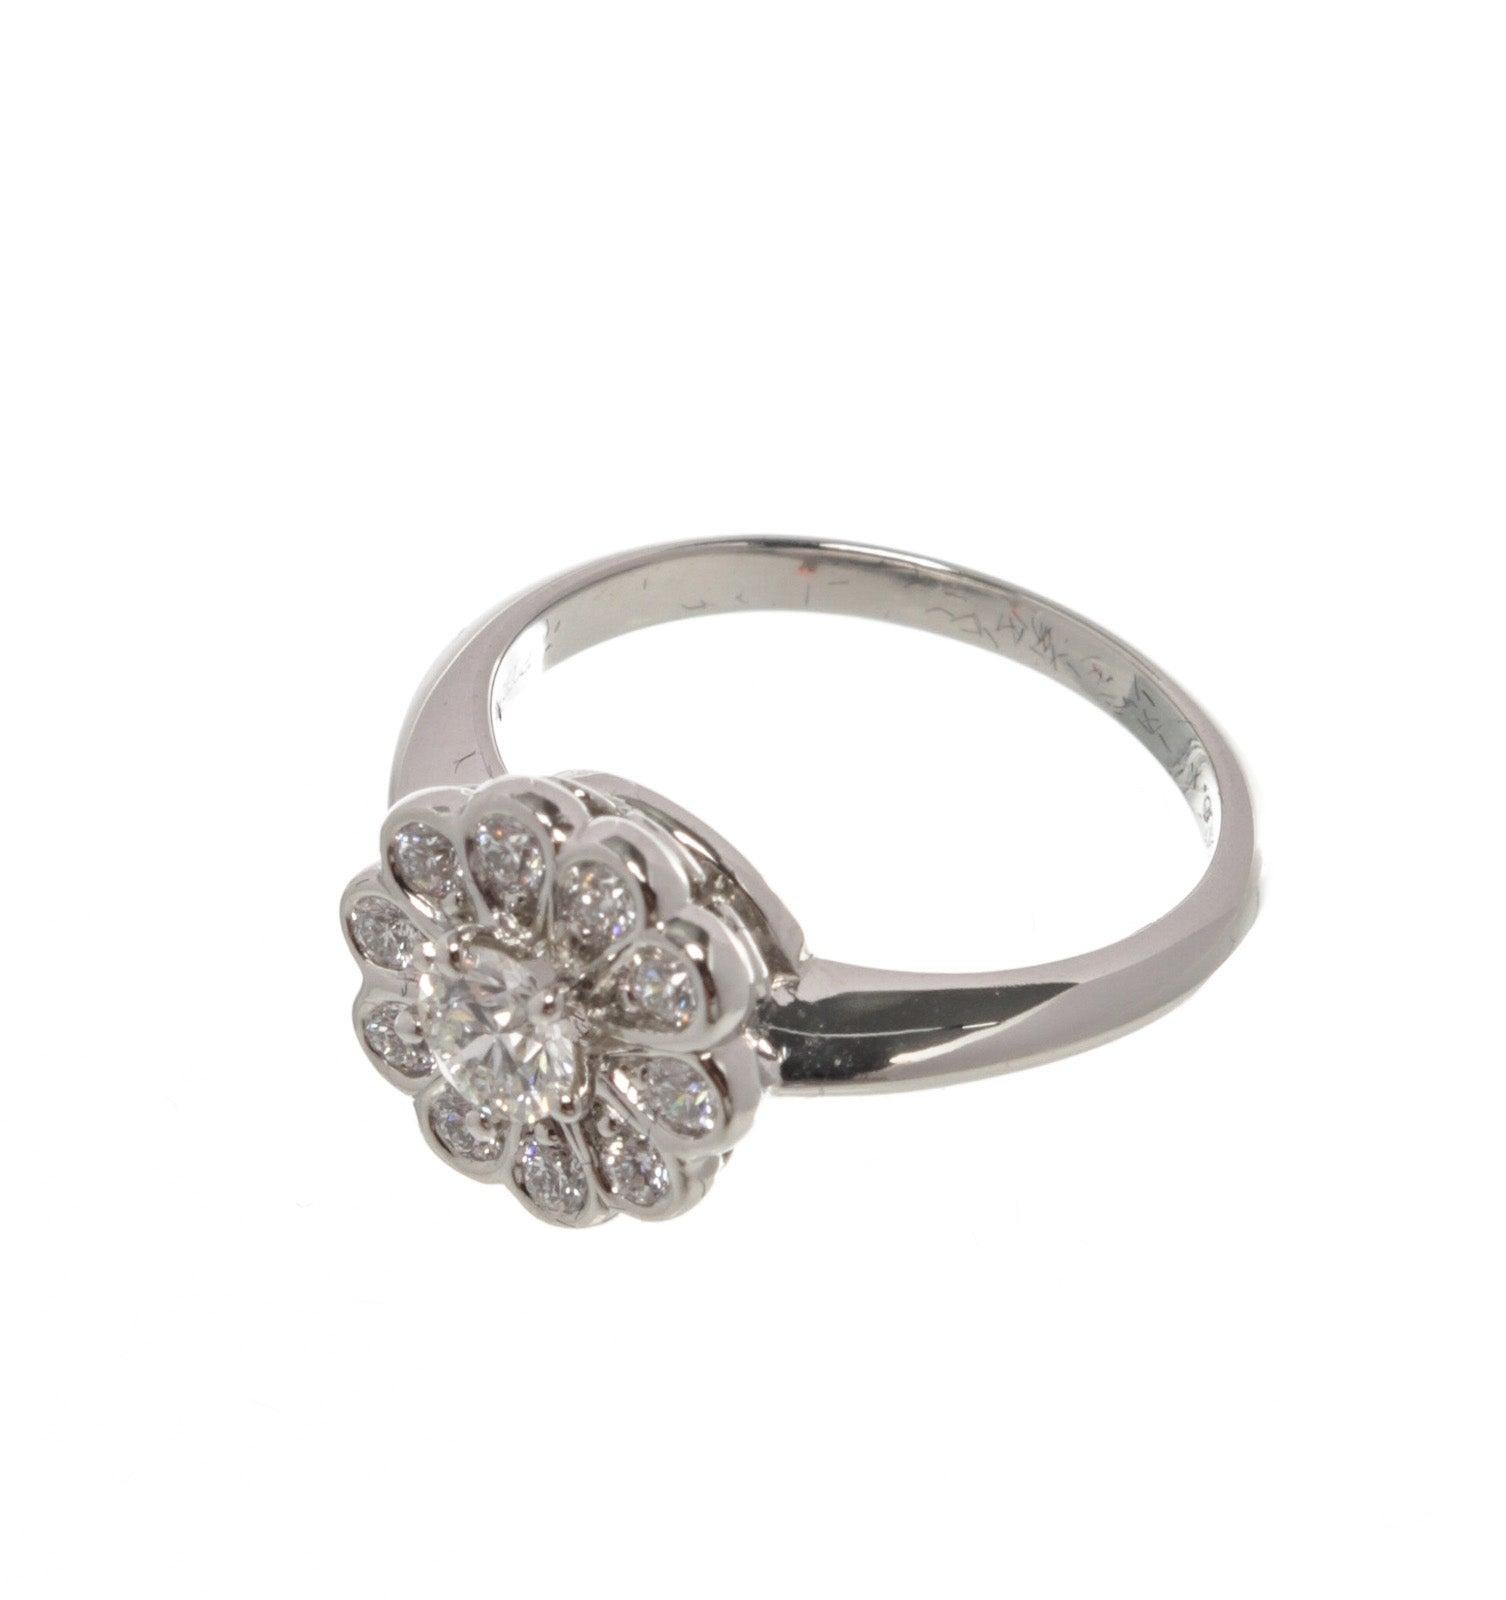 Tiffany & Co. Silver Flower Ring 1